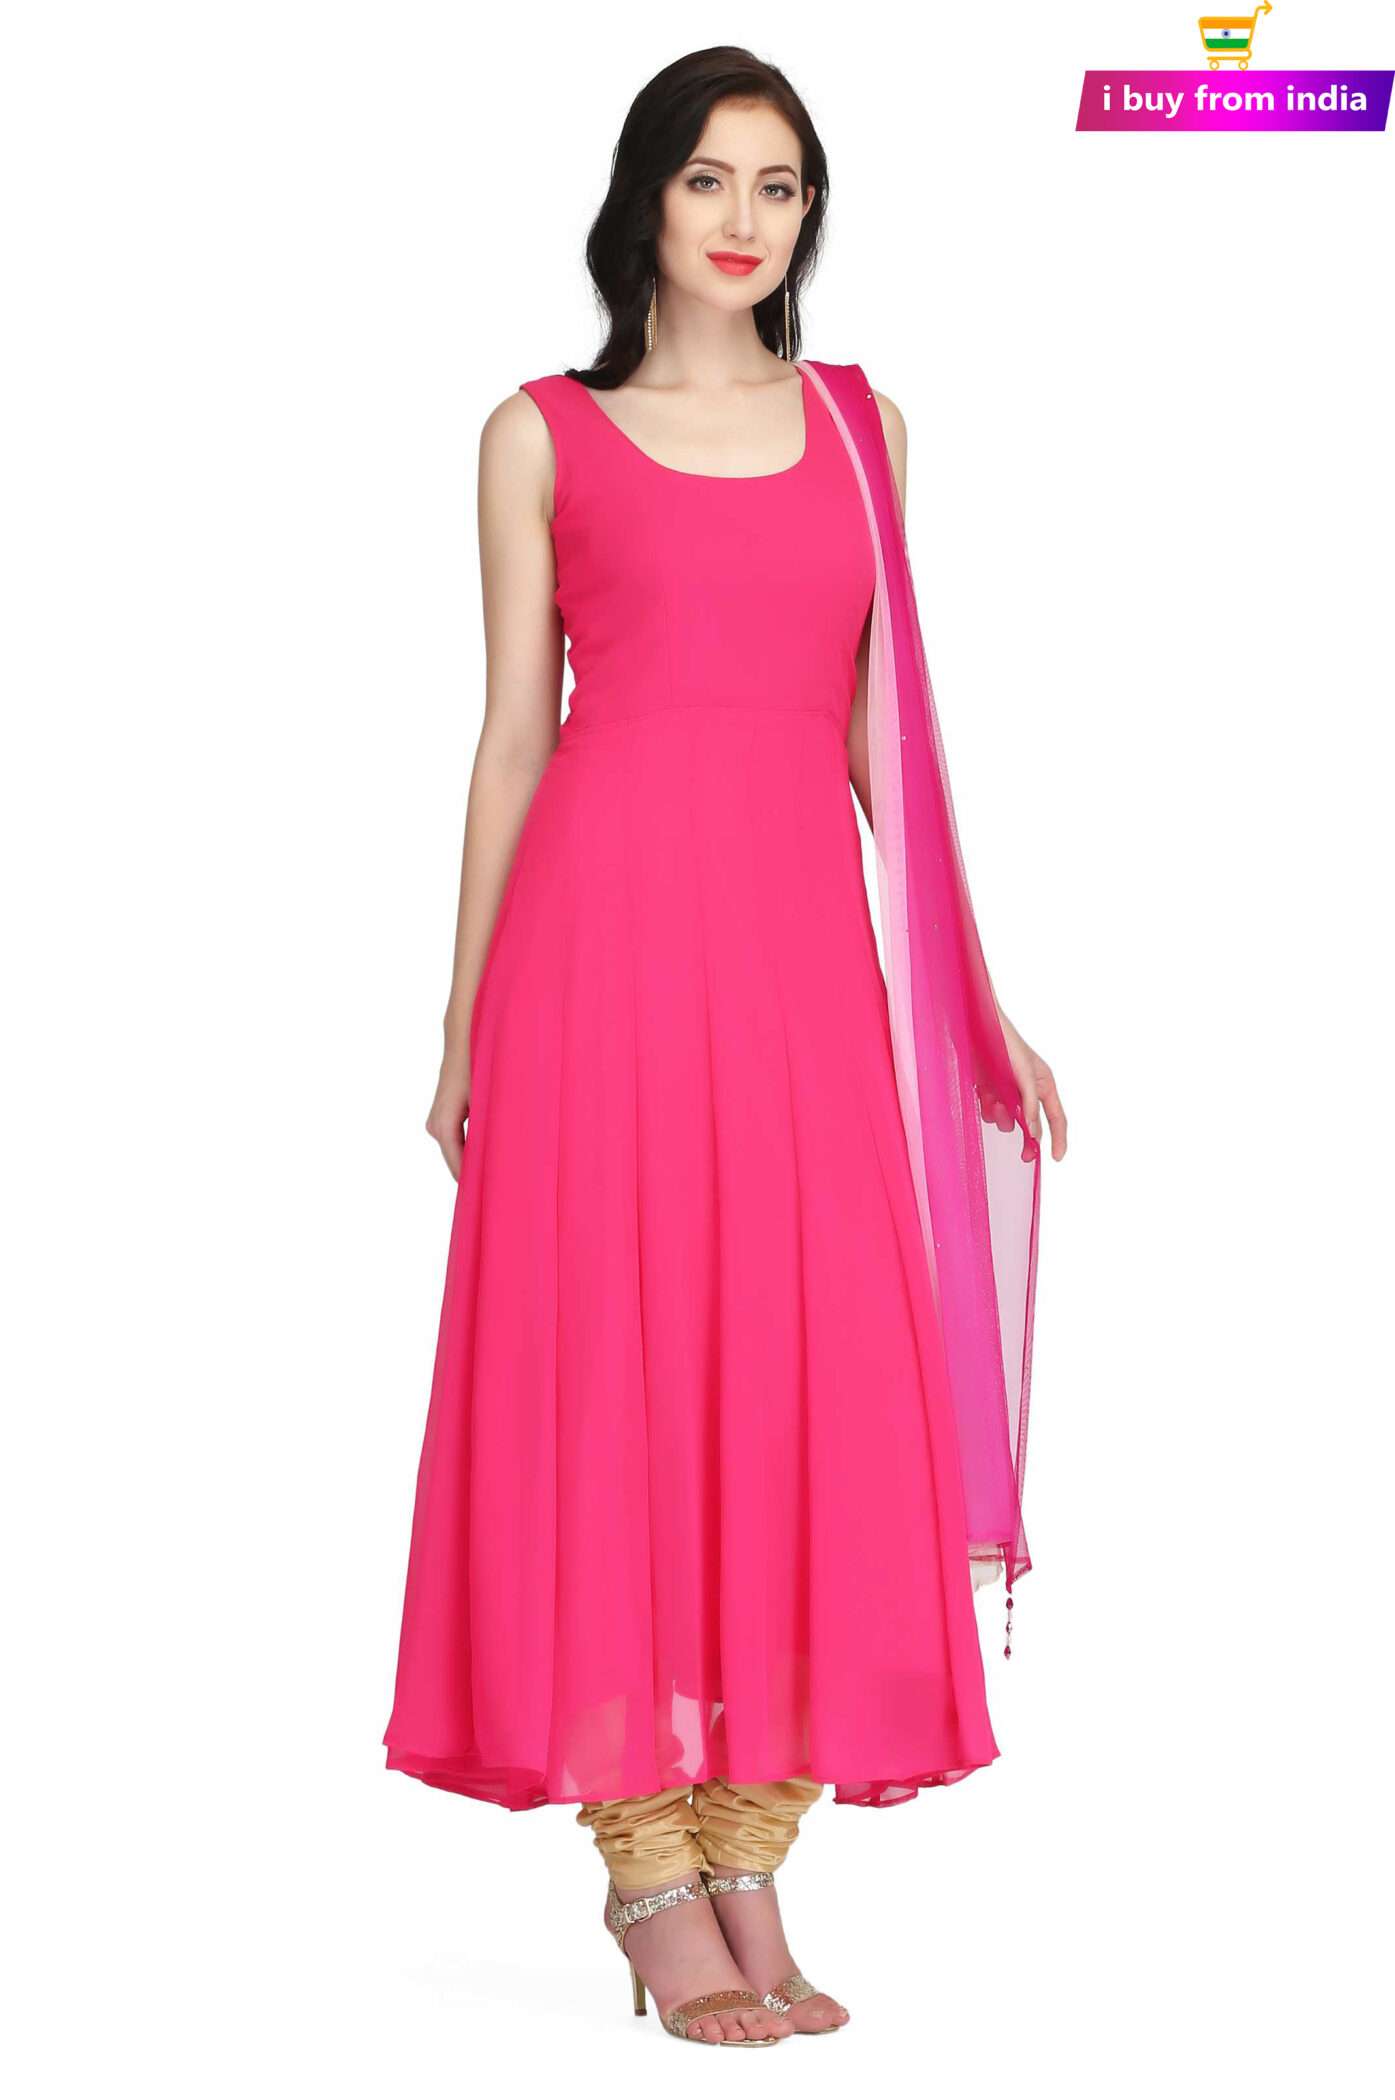 Designer Anarkali Dress Plus Size Dresses Online Fushia  RAHPRET-AK555-9966000564 – iBuyFromIndia